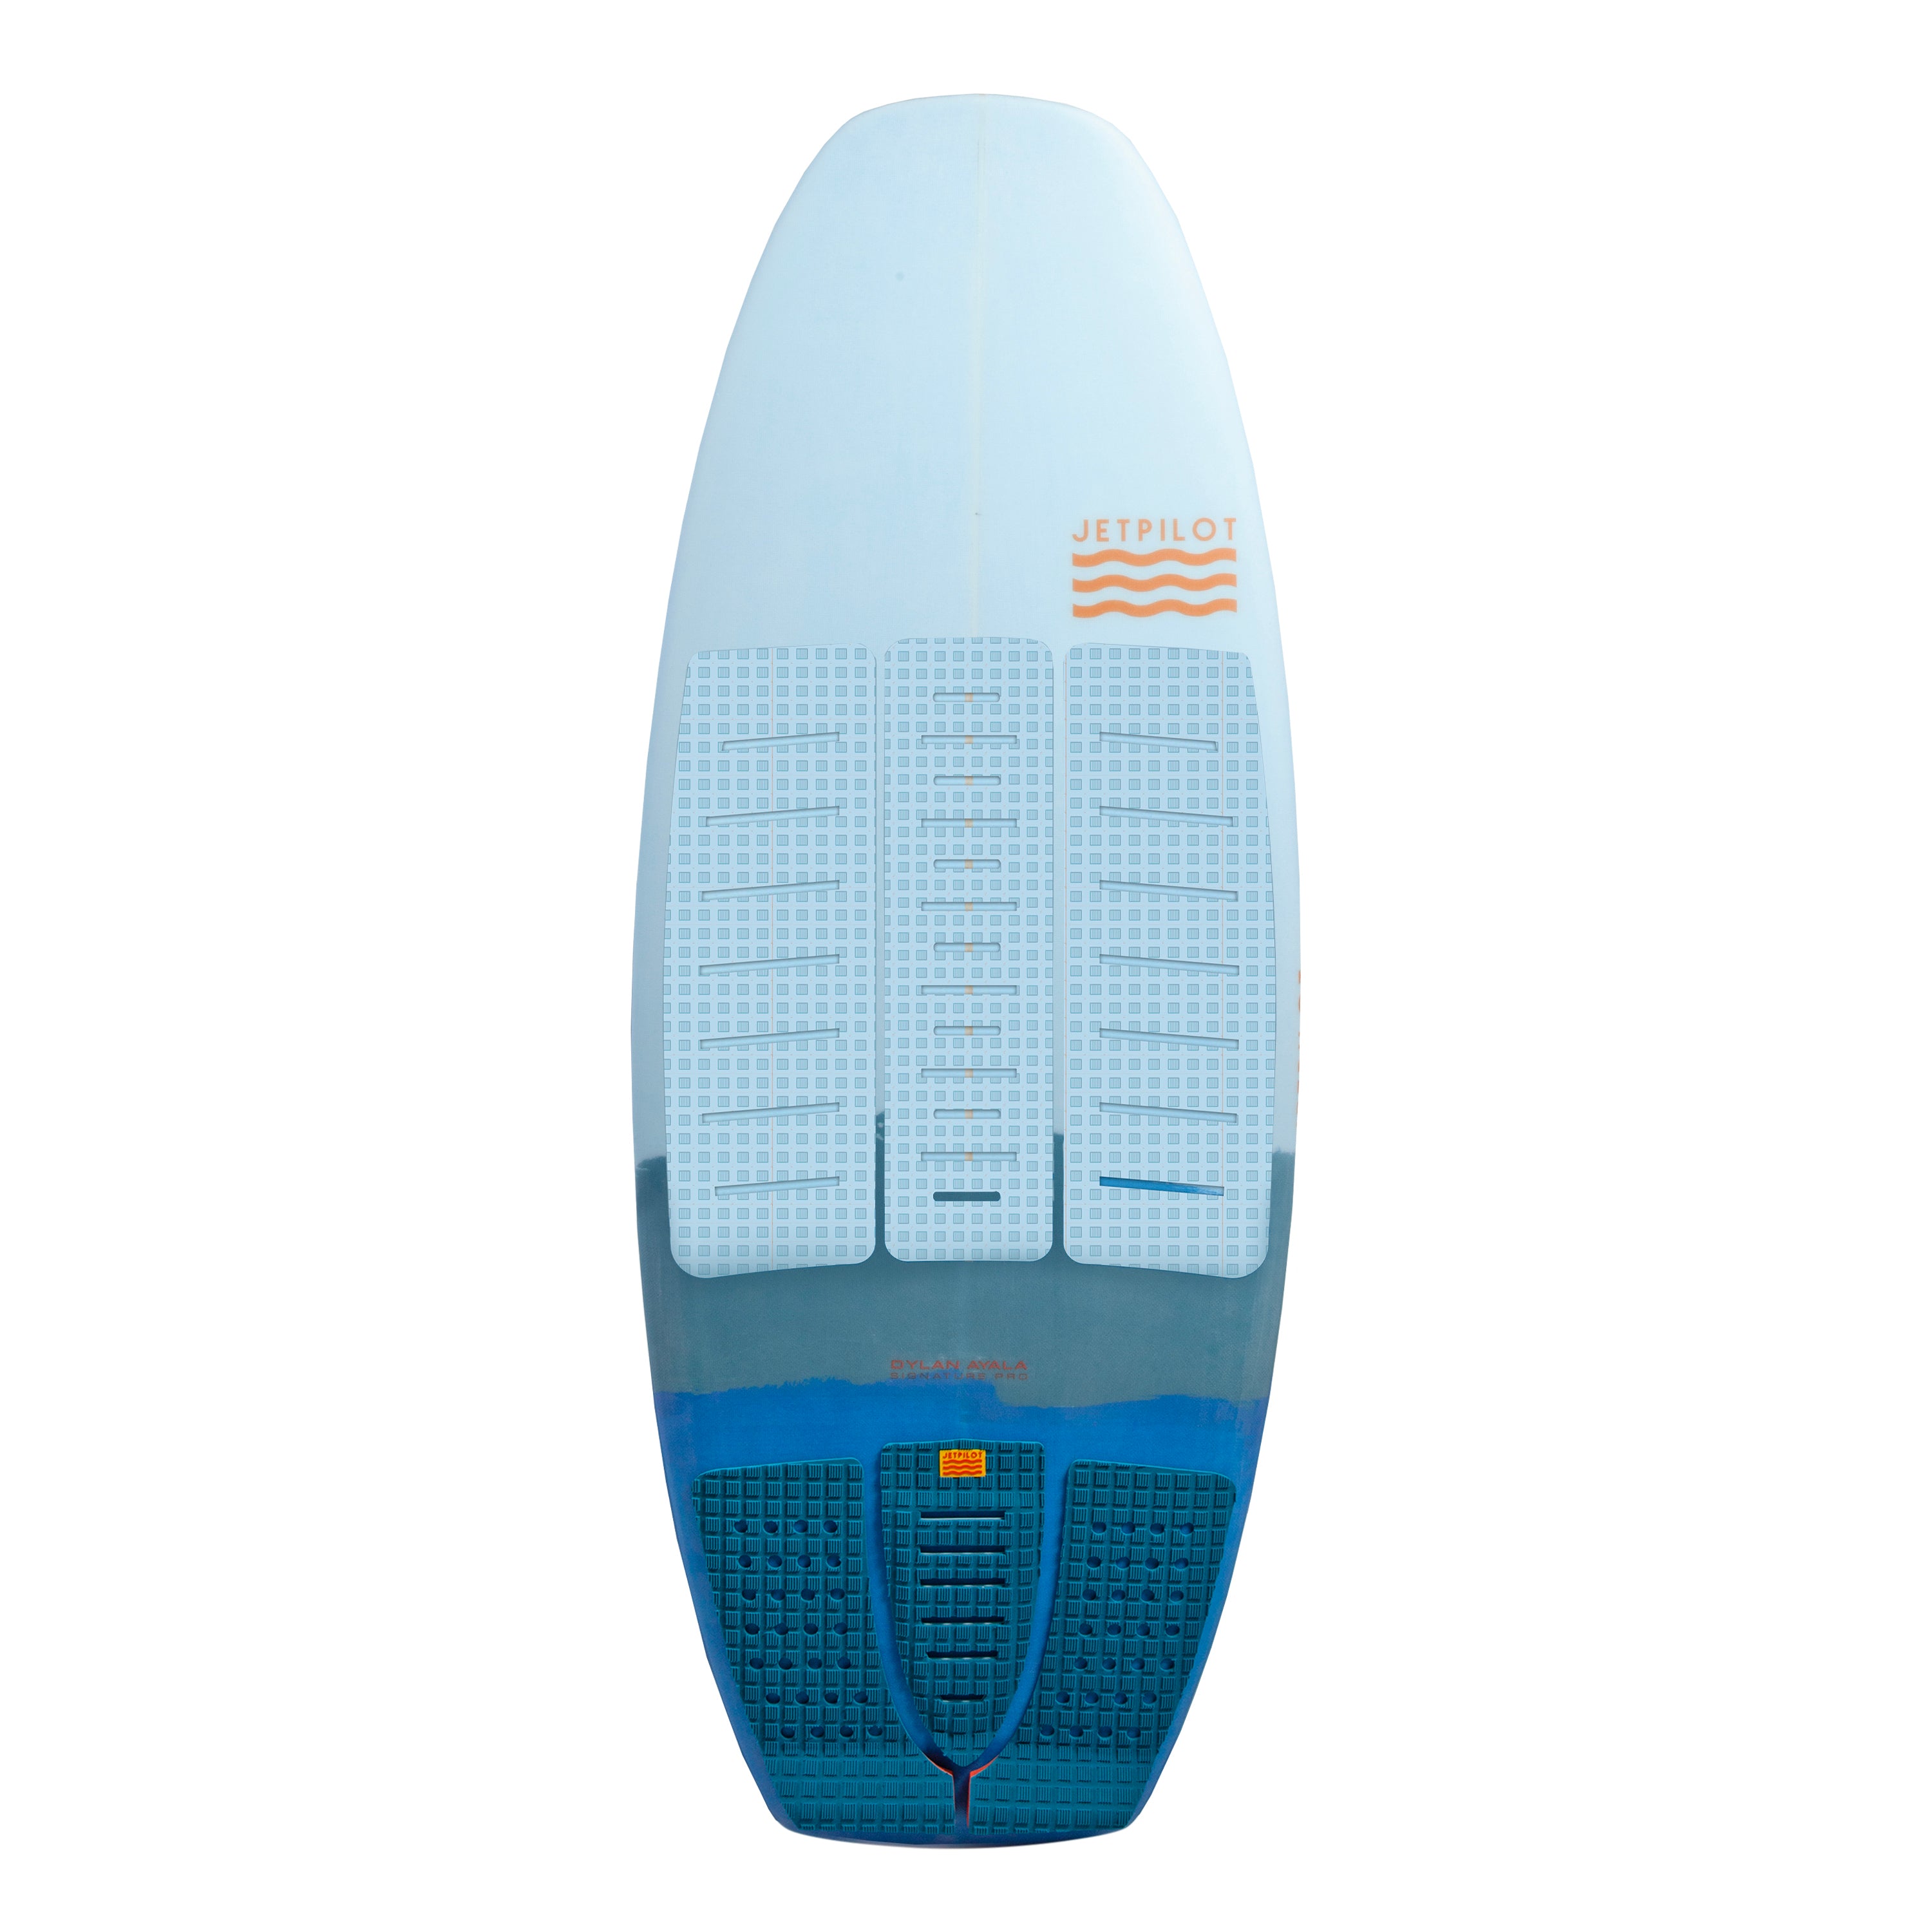 Jetpilot Dylan Ayala Pro Model Wake Surfboard – JETPILOT